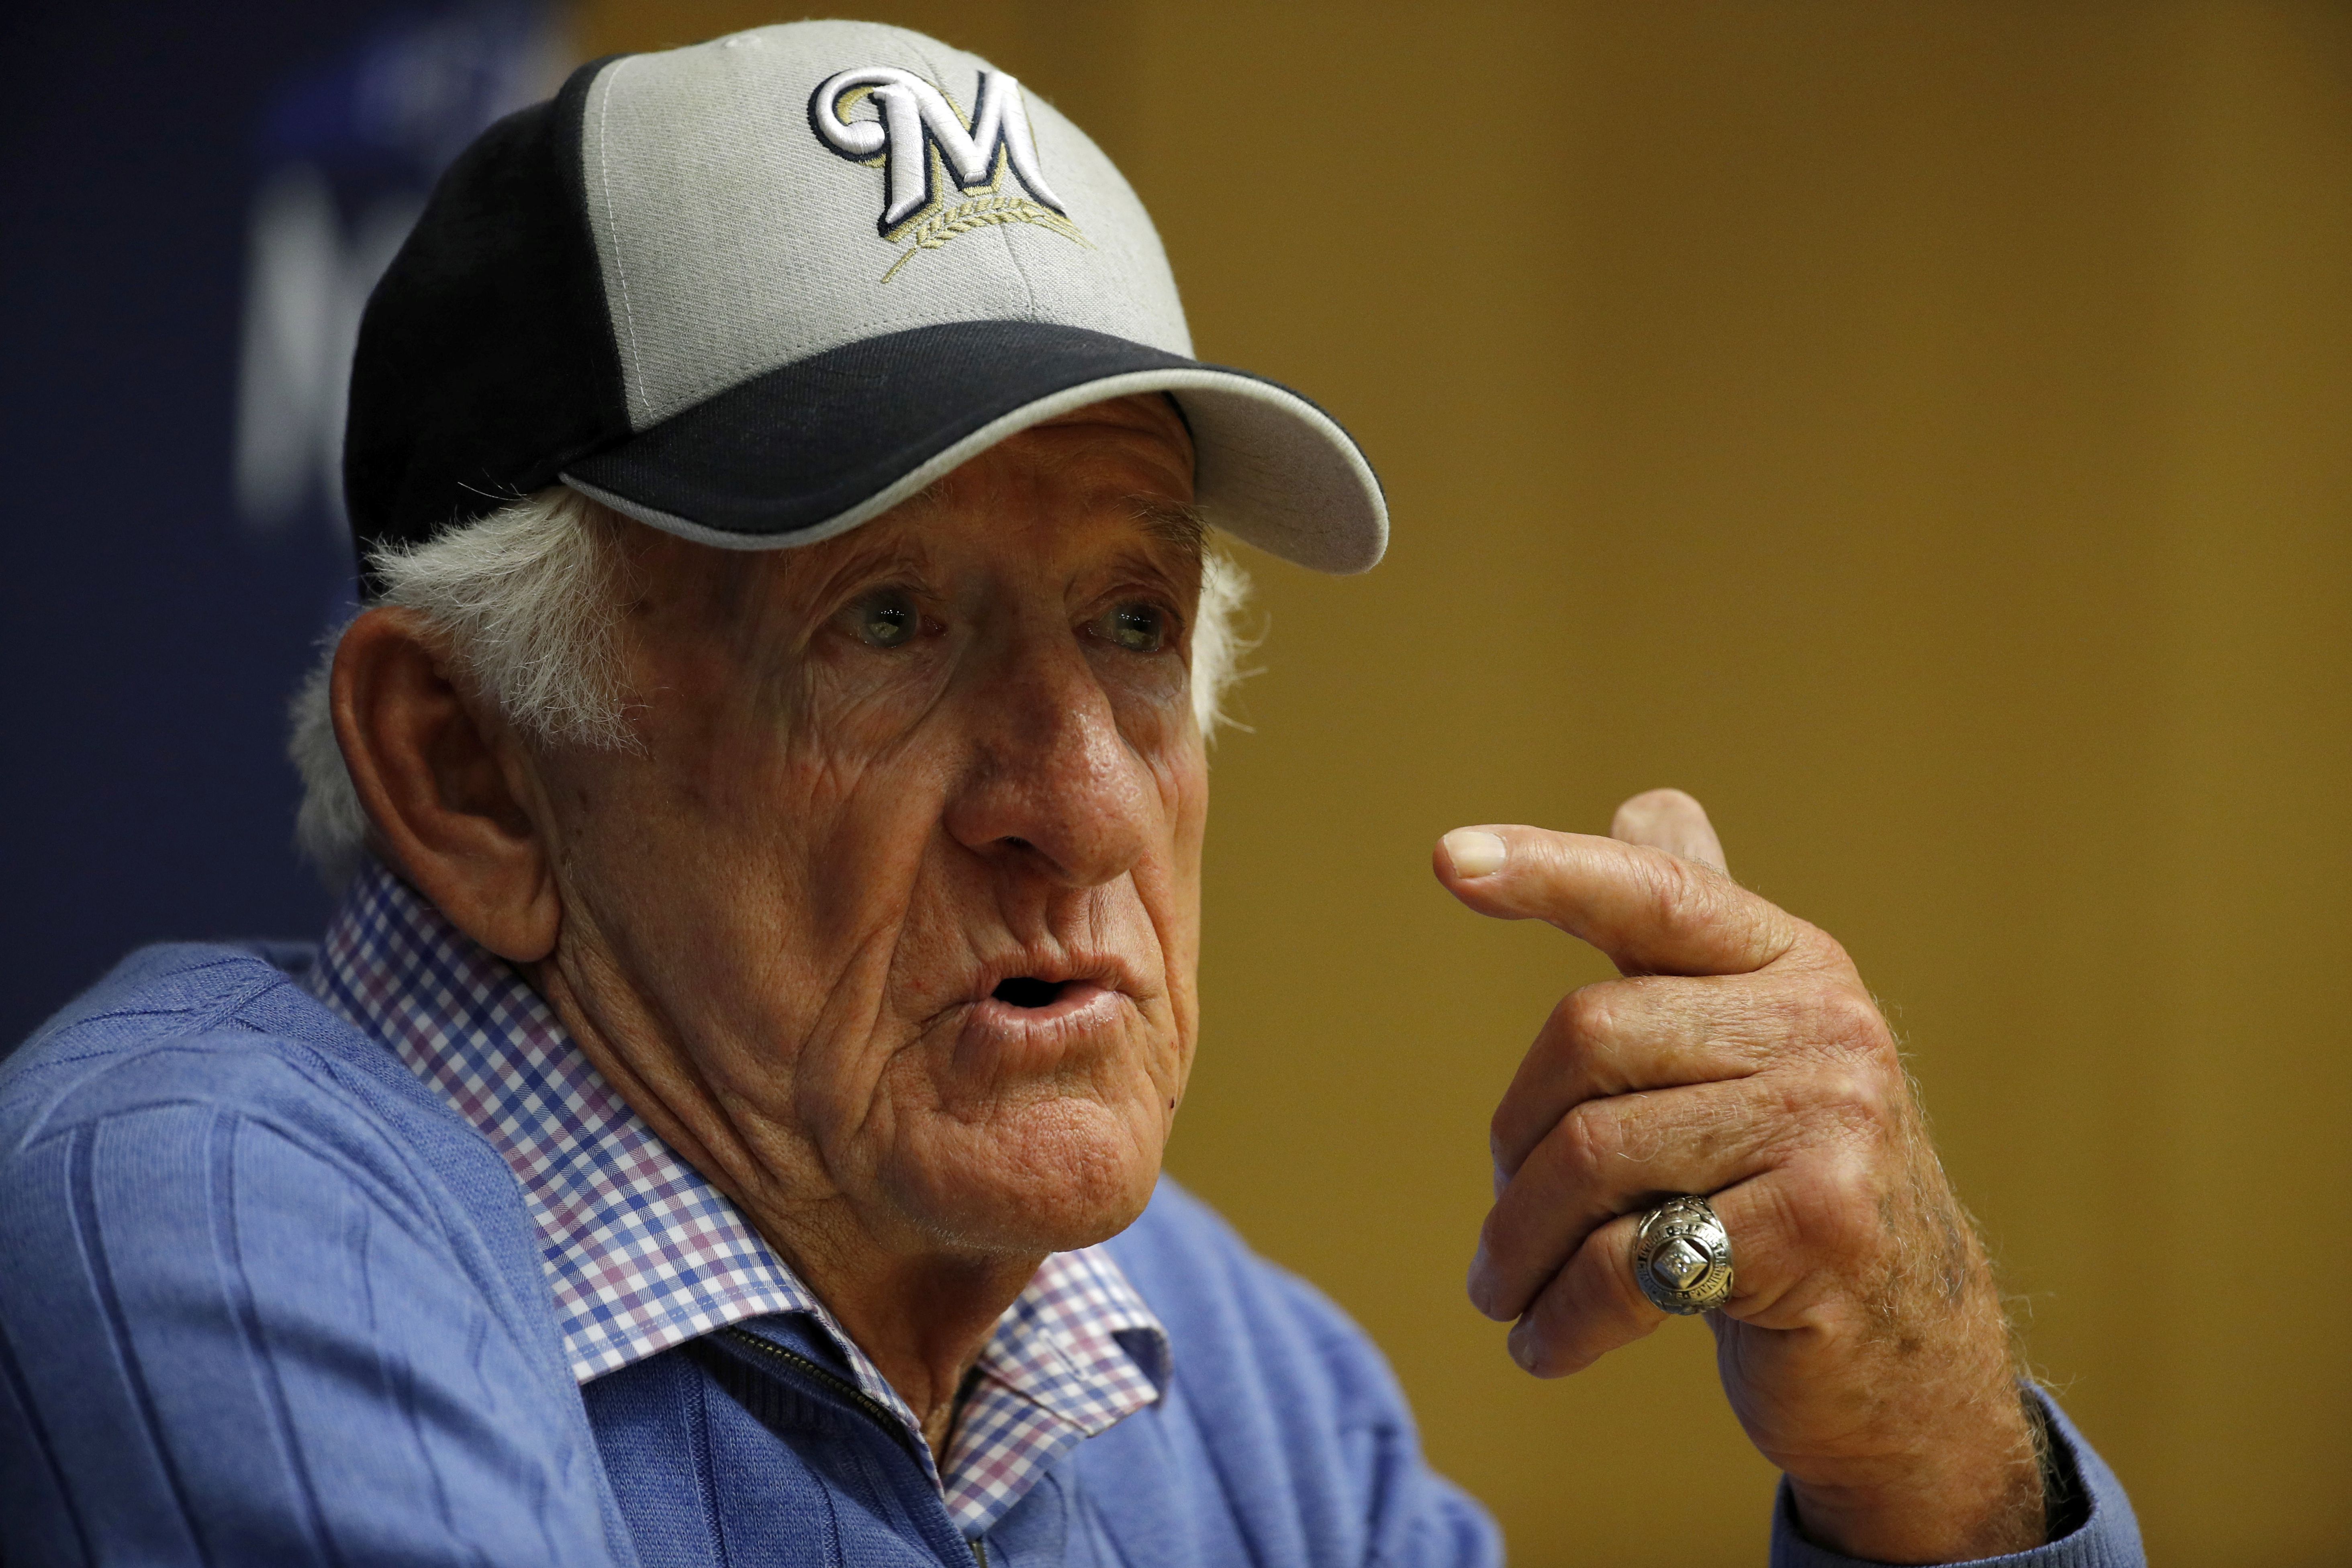 Legendary Milwaukee Brewers broadcaster Bob Uecker, 84, reveals he